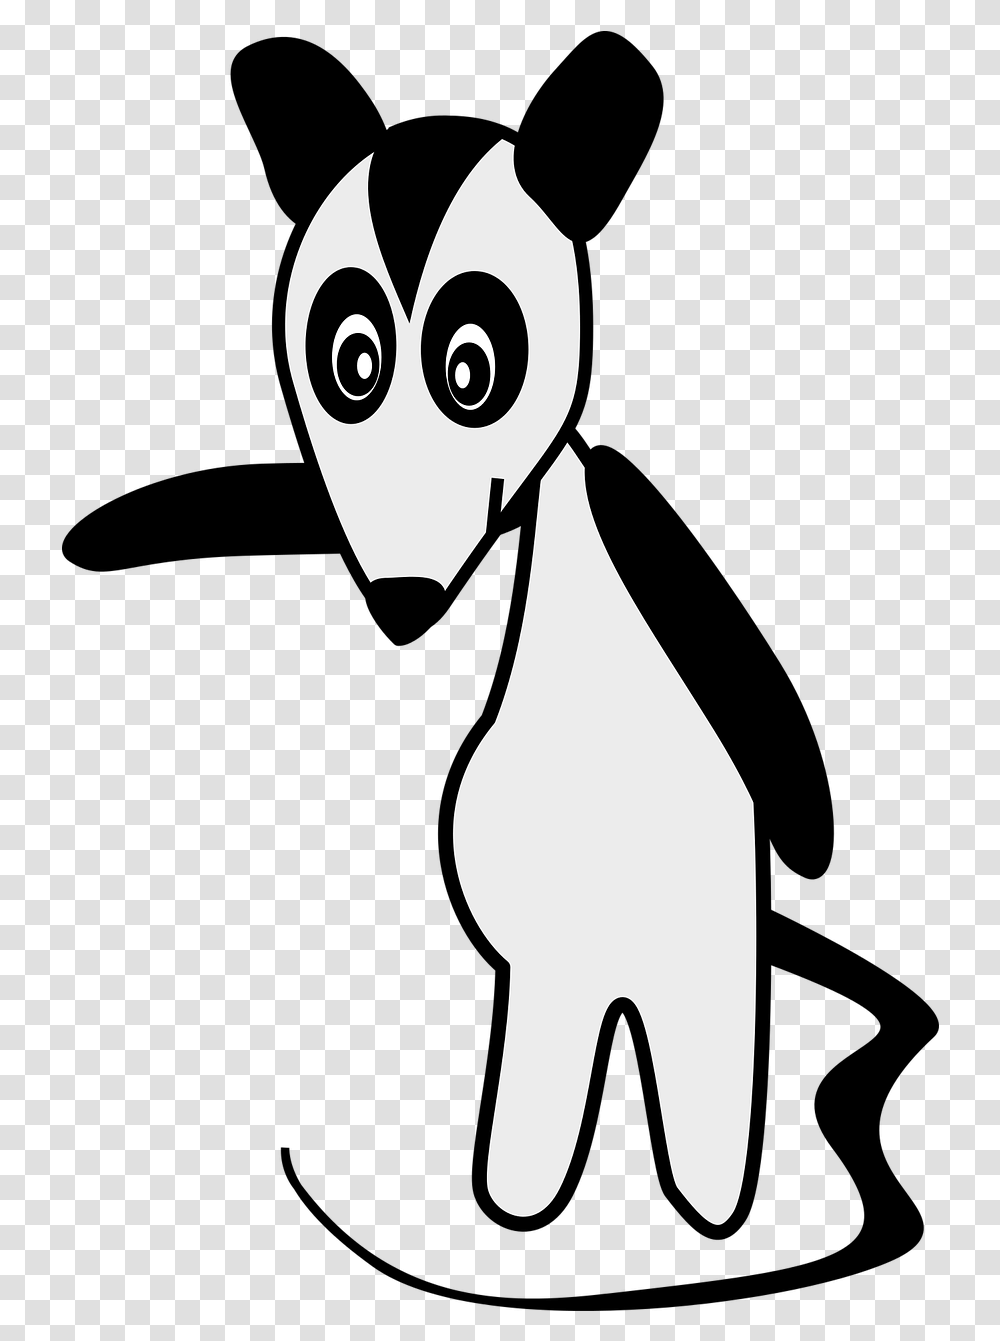 Possum Skunk Animal Free Vector Graphic On Pixabay Desenho Saru, Mammal, Stencil, Pet, Cat Transparent Png